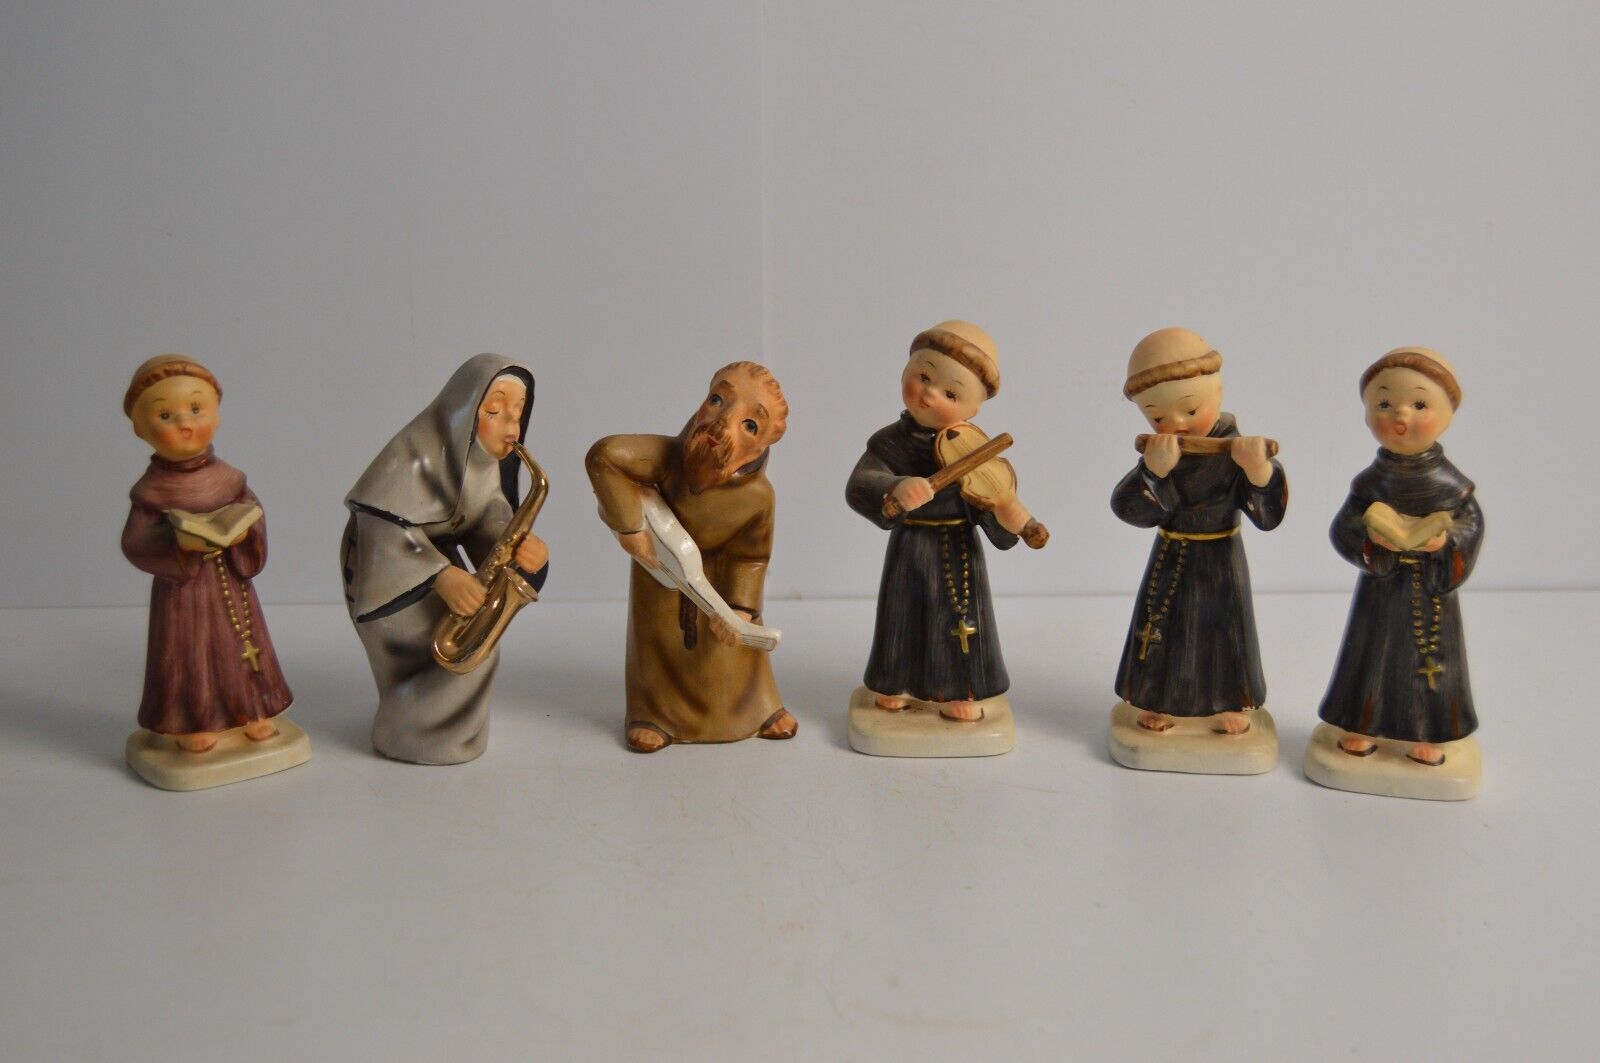 6 Vintage Musical Monks Nuns Napco Japan 1956 MCM Collectible Figurines Pottery